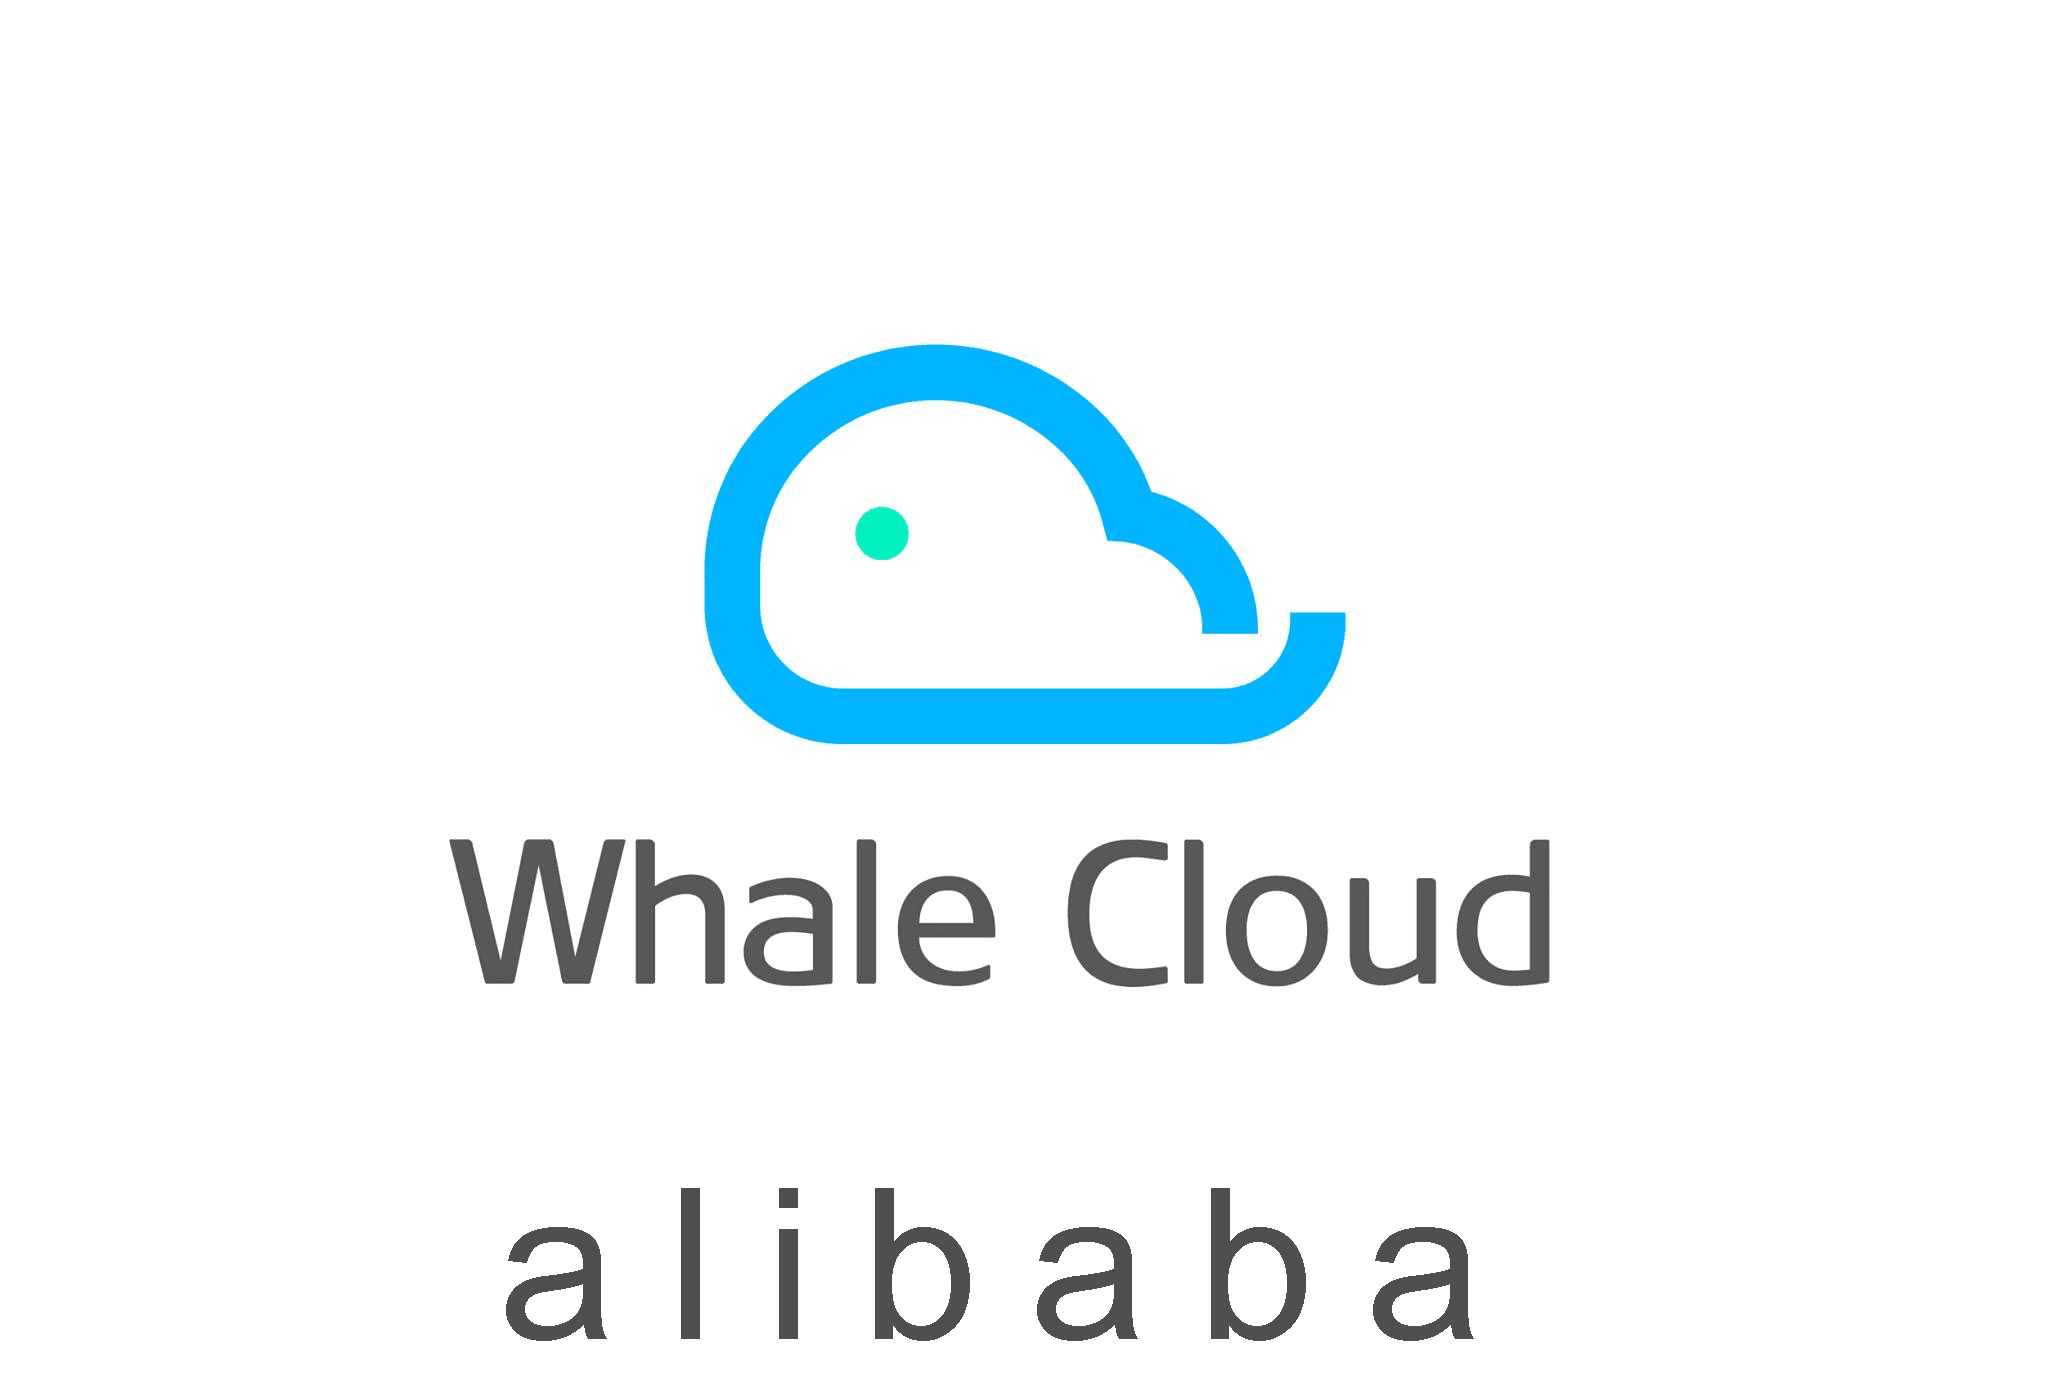 Whale cloud alibaba